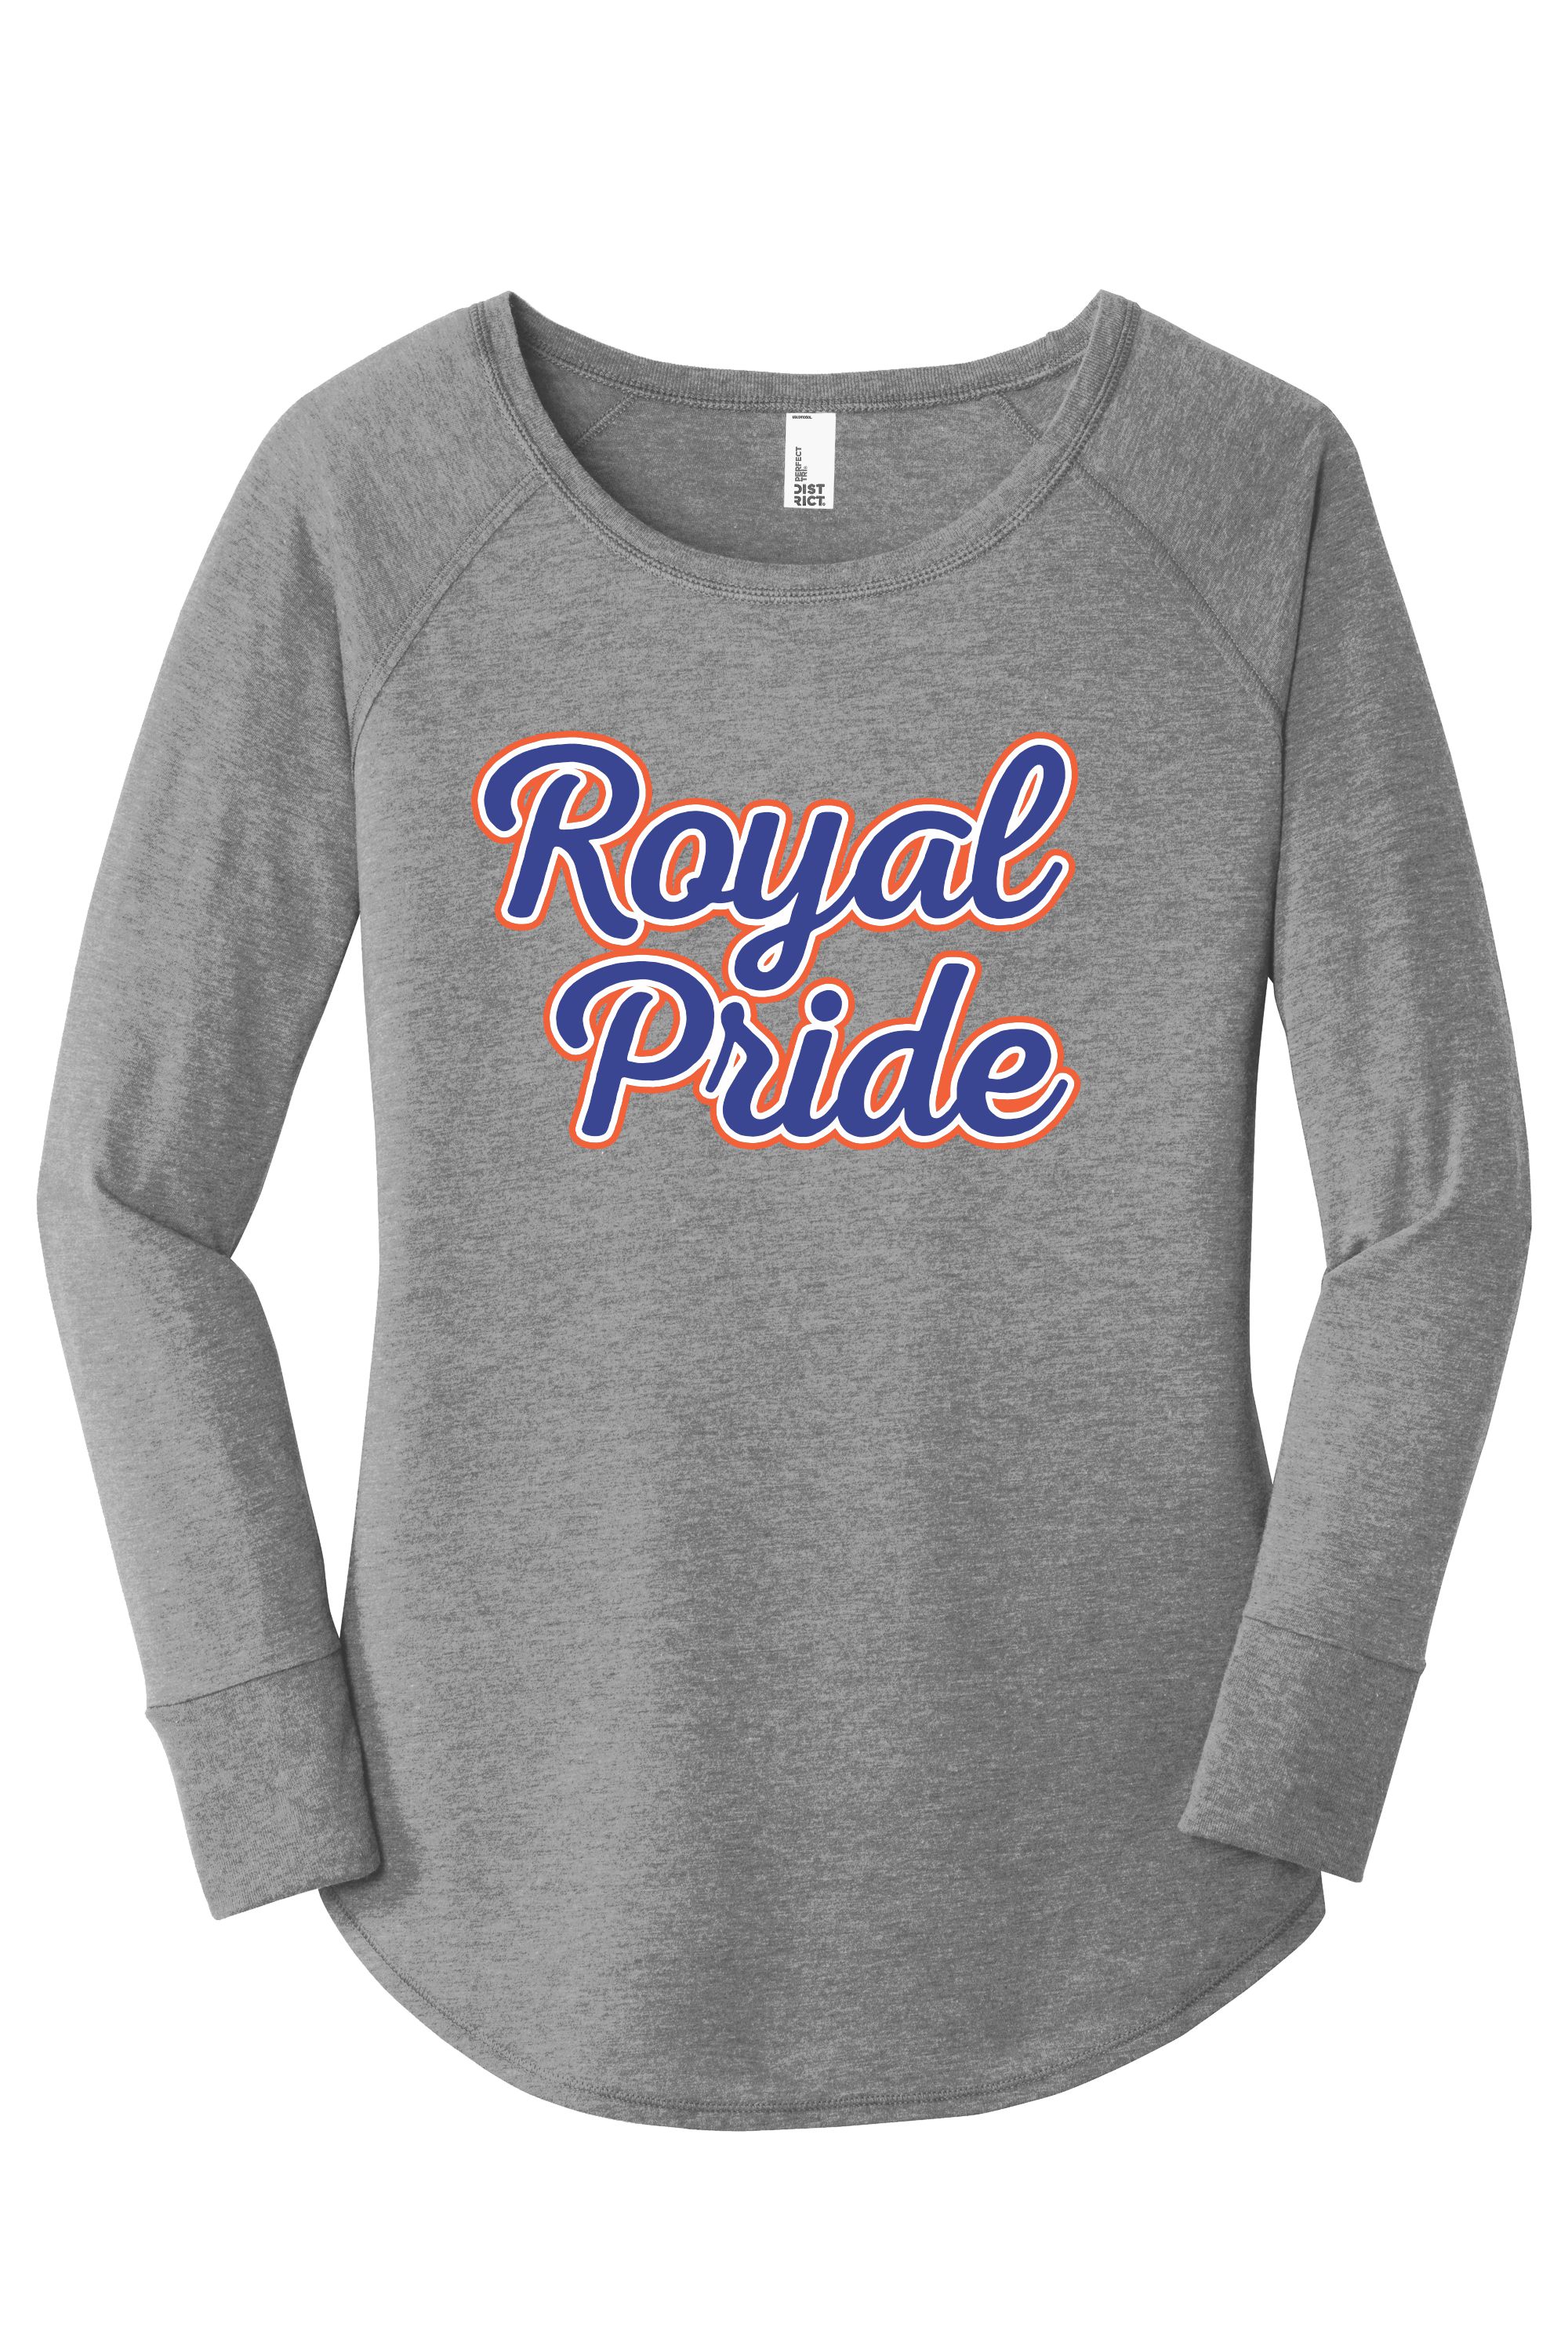 Tri Blend Royal Pride Long Sleeve t shirt